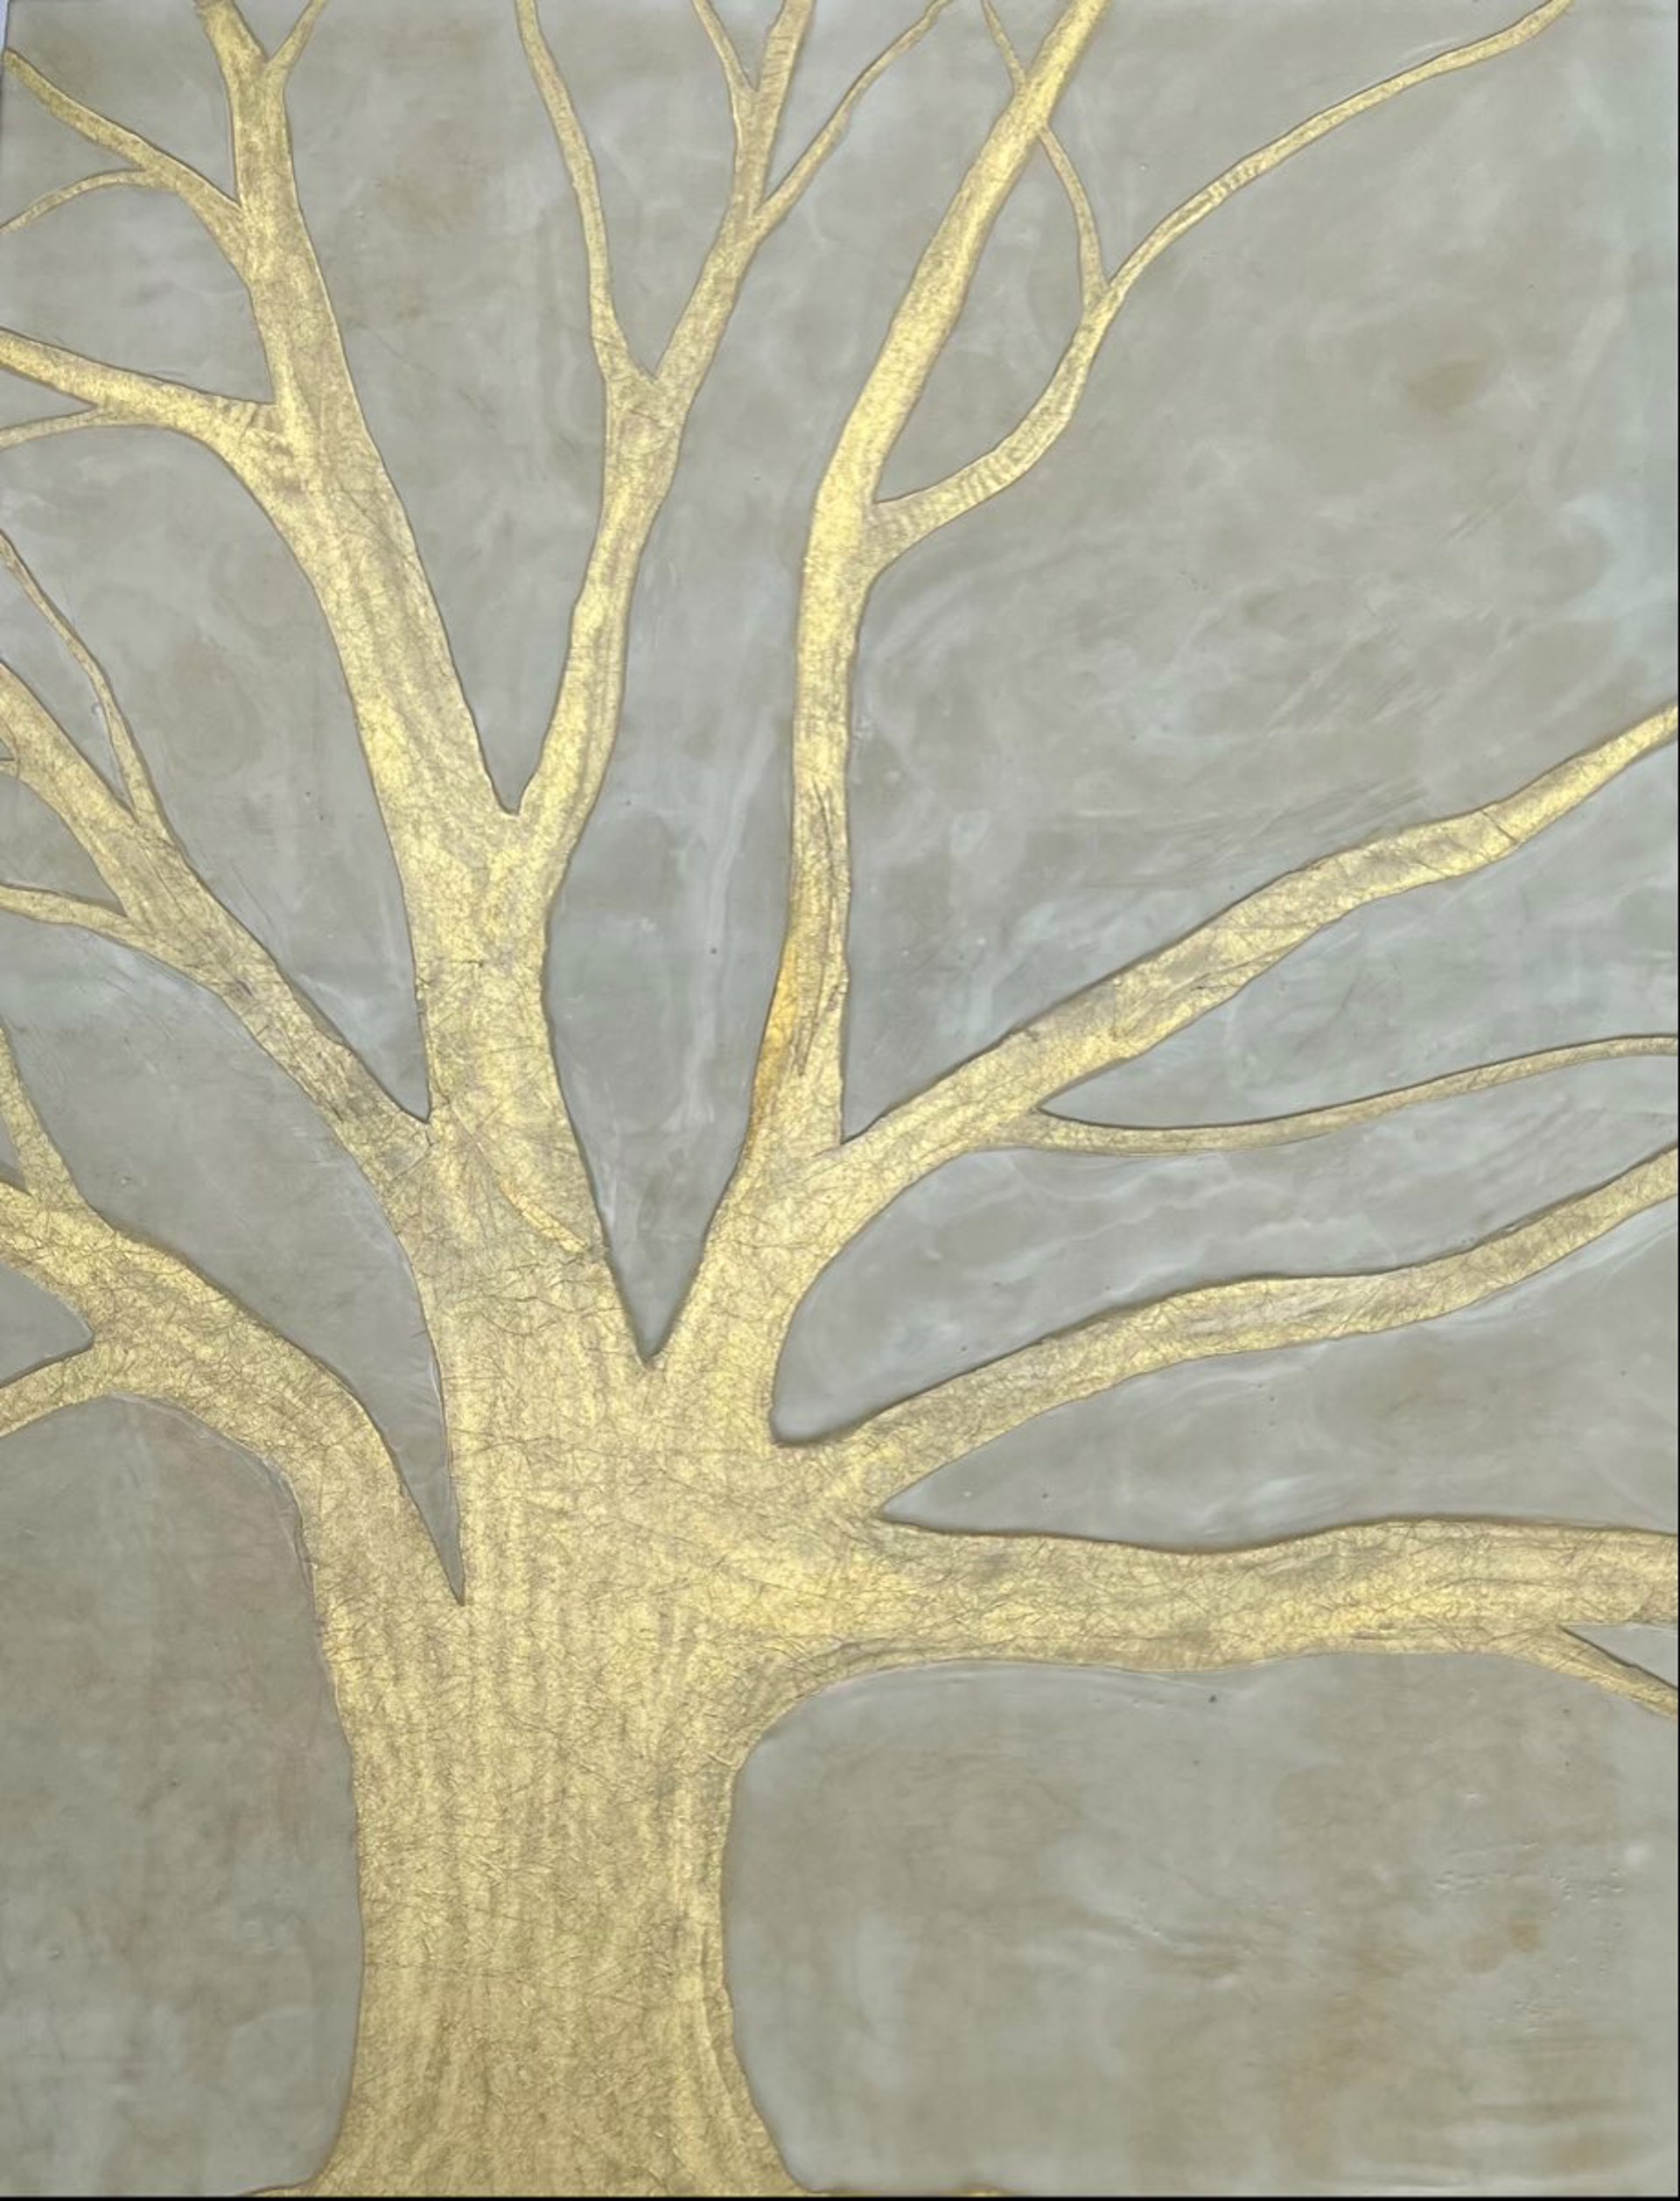 Mystic Oak by Suzanne Damrich